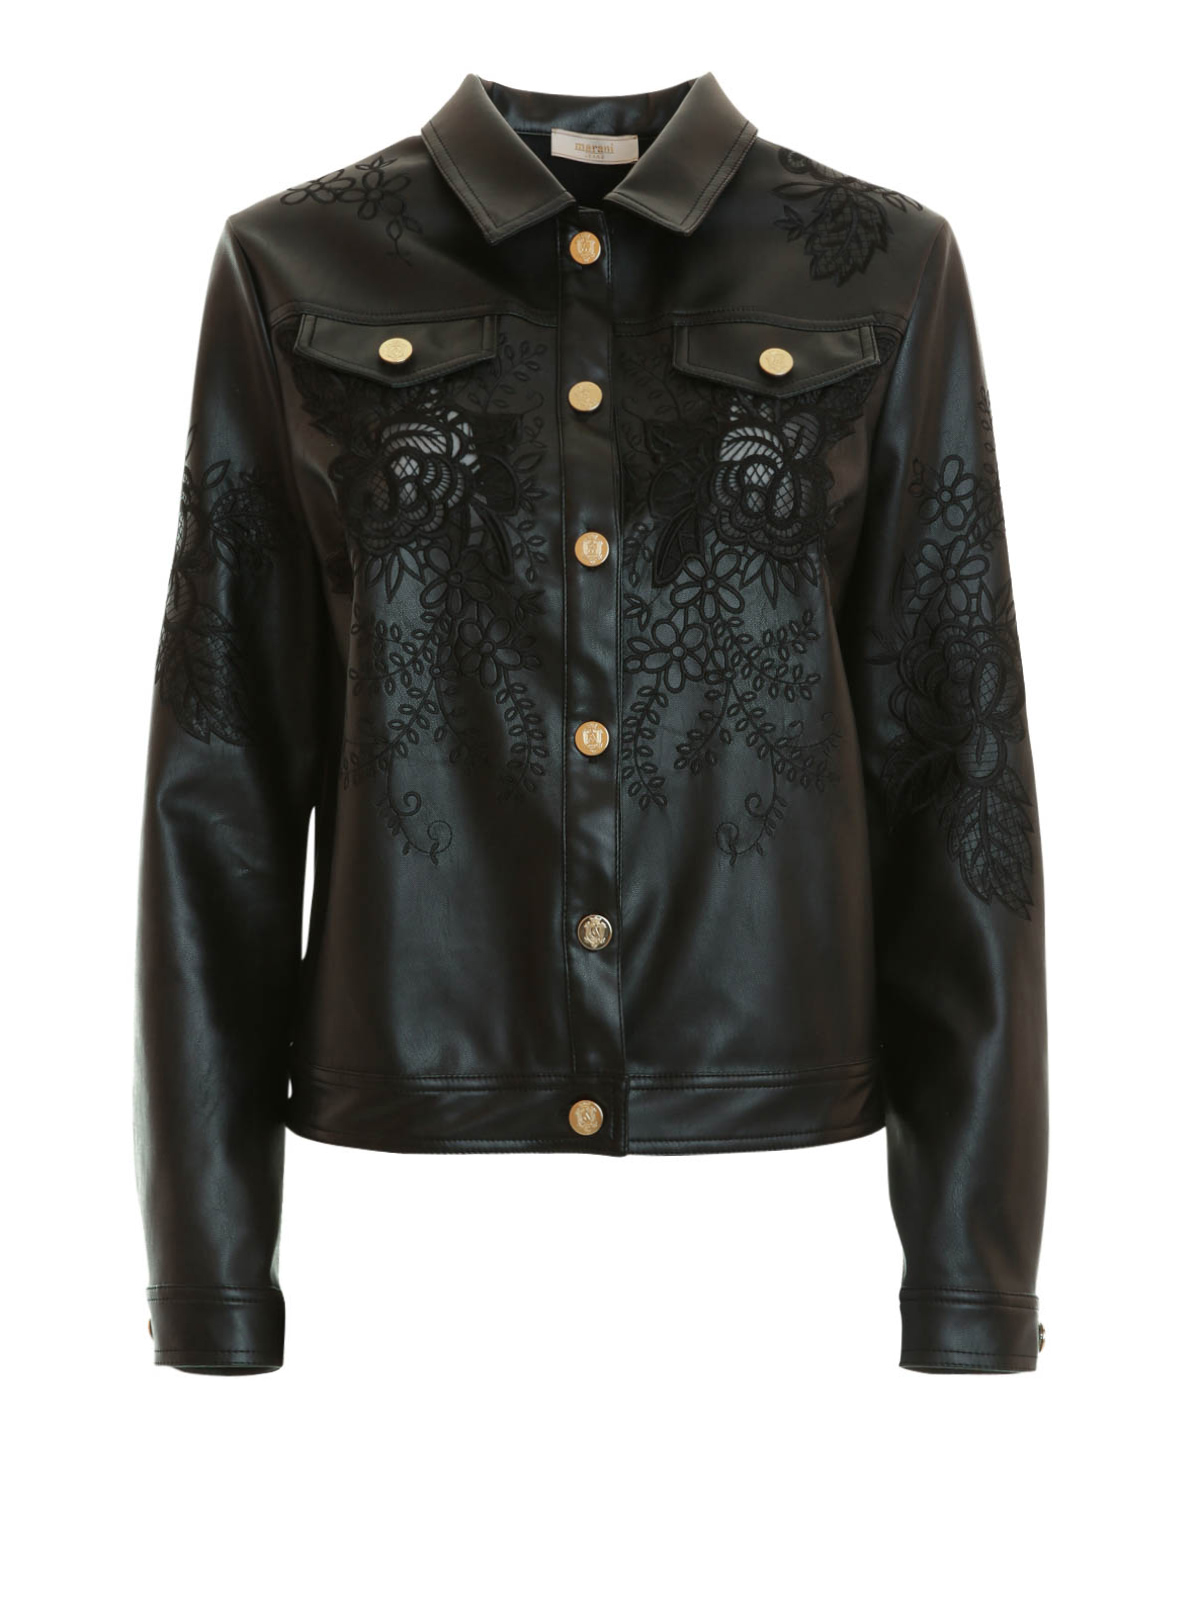 Bombers Angelo Marani - Embroidered bomber jacket - 224960R0009